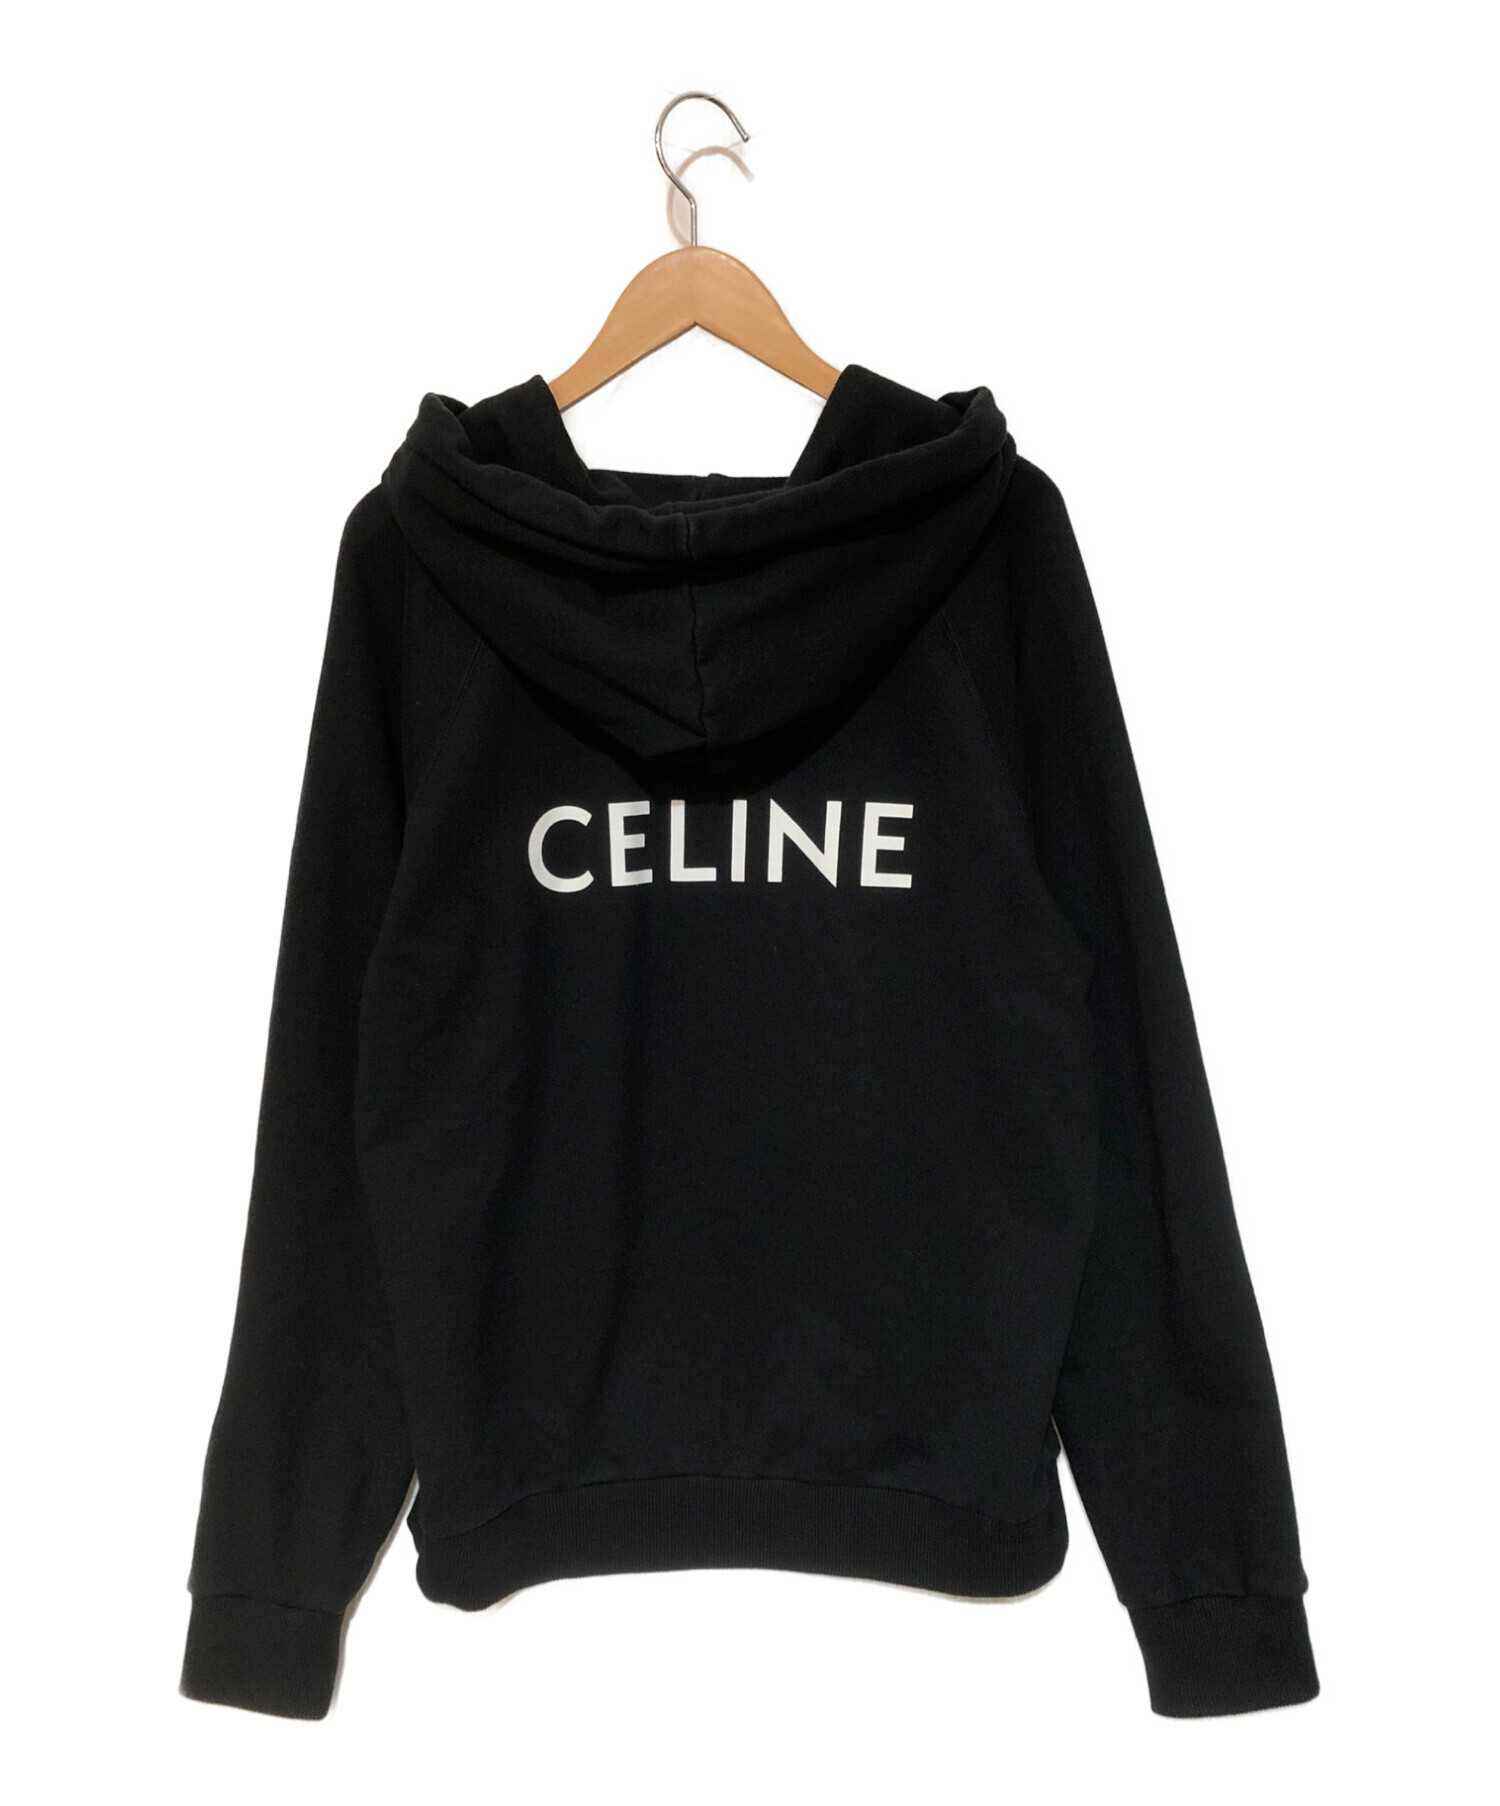 CELINE (セリーヌ) CELINE バックロゴプリントプルオーバー フーディー パーカー ブラック サイズ:XL